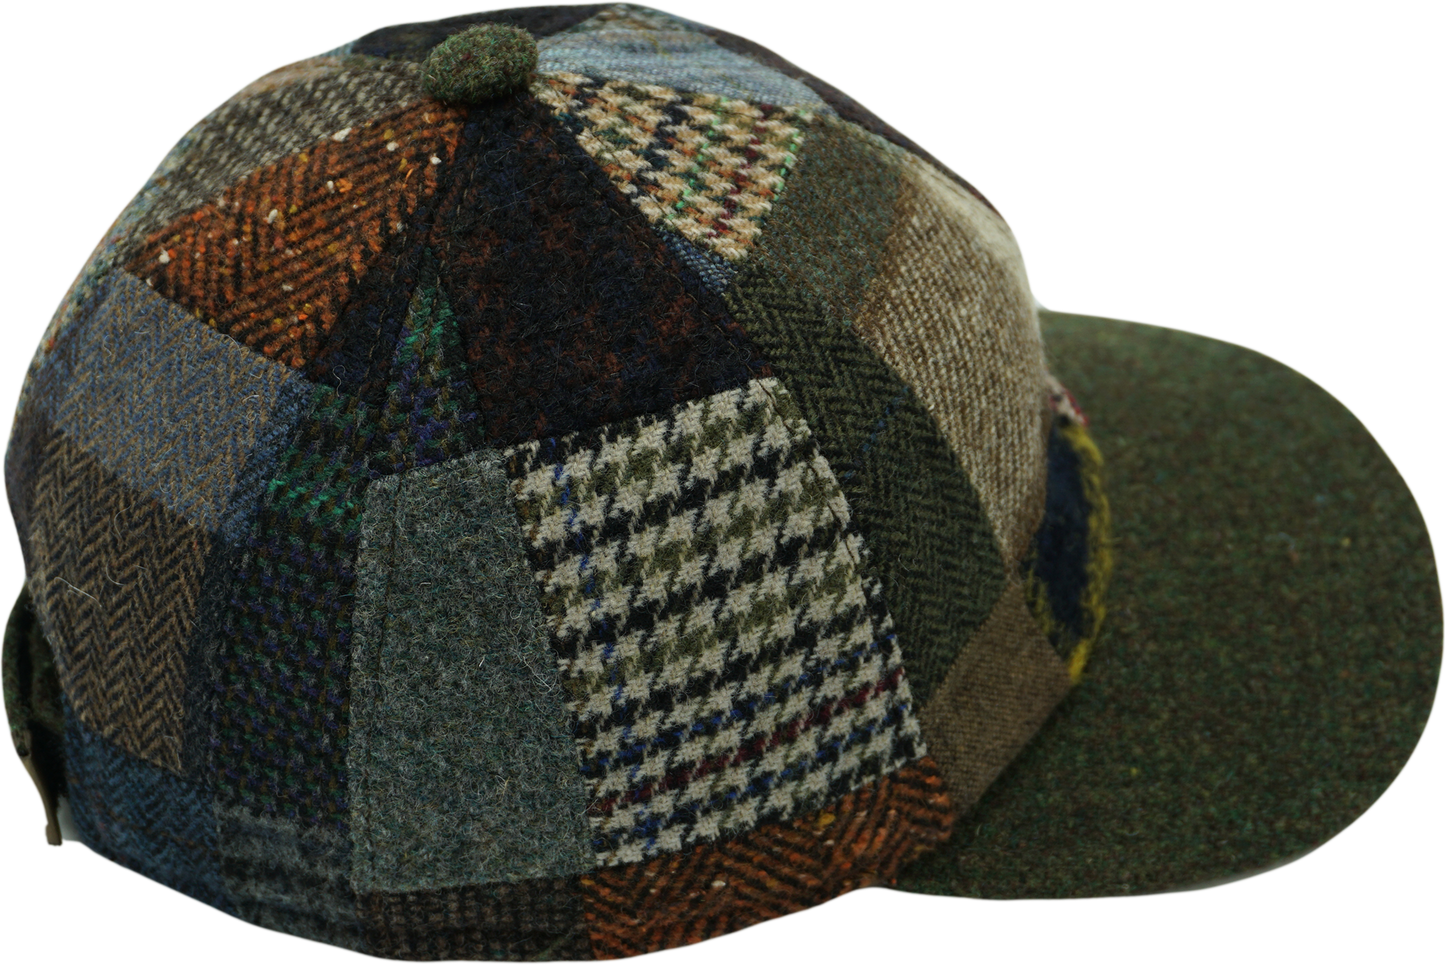 Patchwork Baseball Hat (Wool)